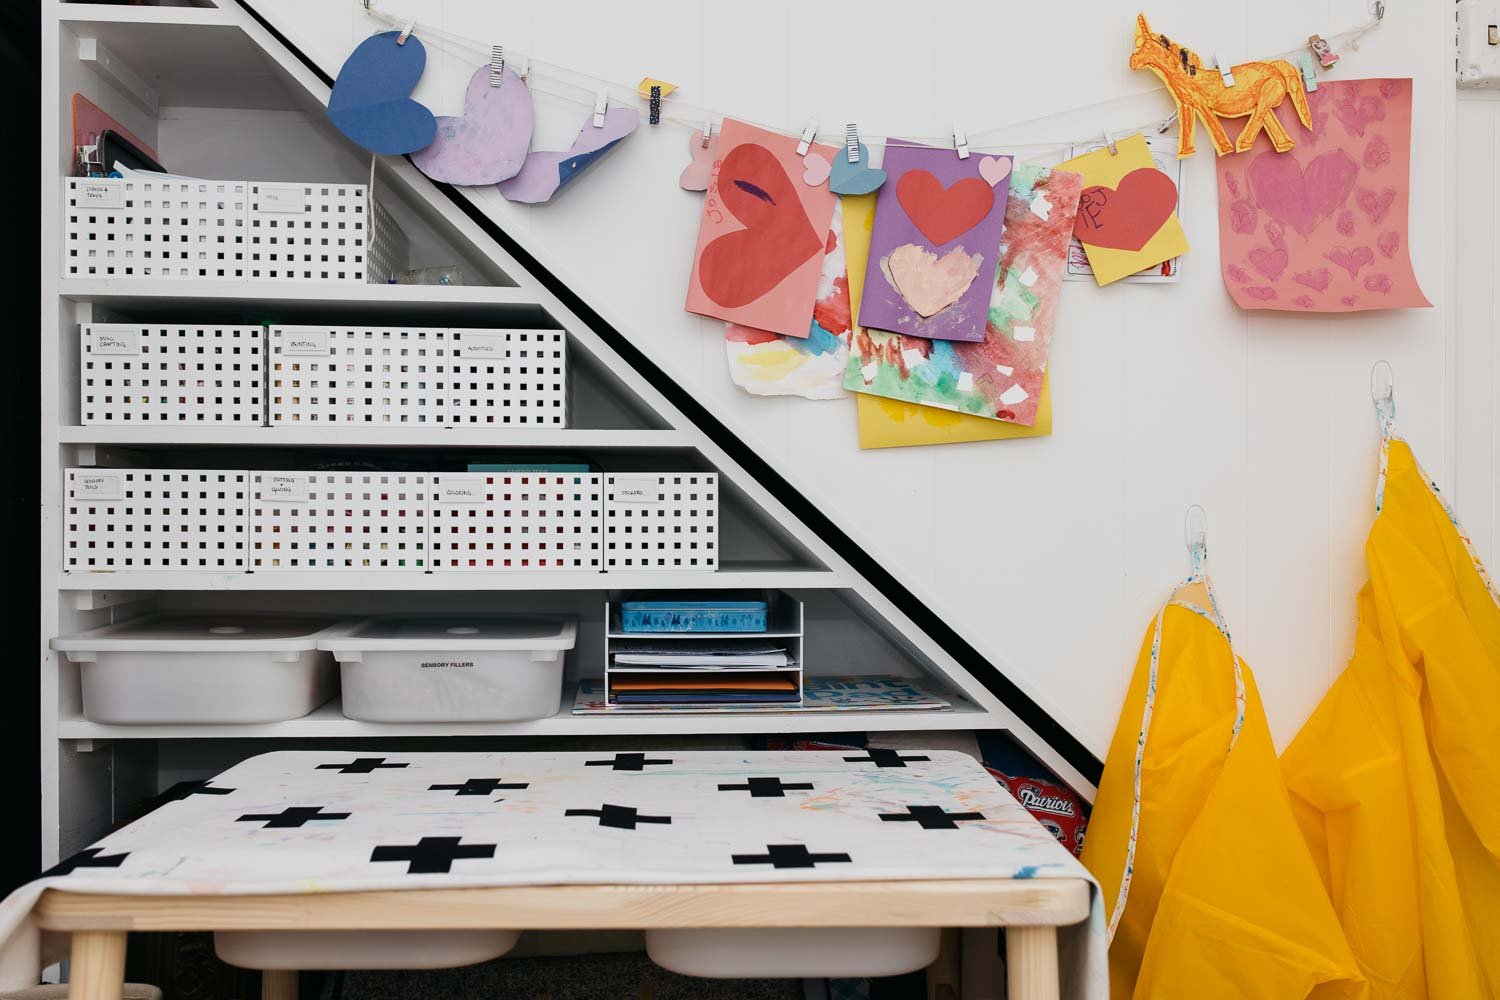 Simple Kids Art Supply Storage Solution - Create an Art Cart, Simple  Purposeful Living